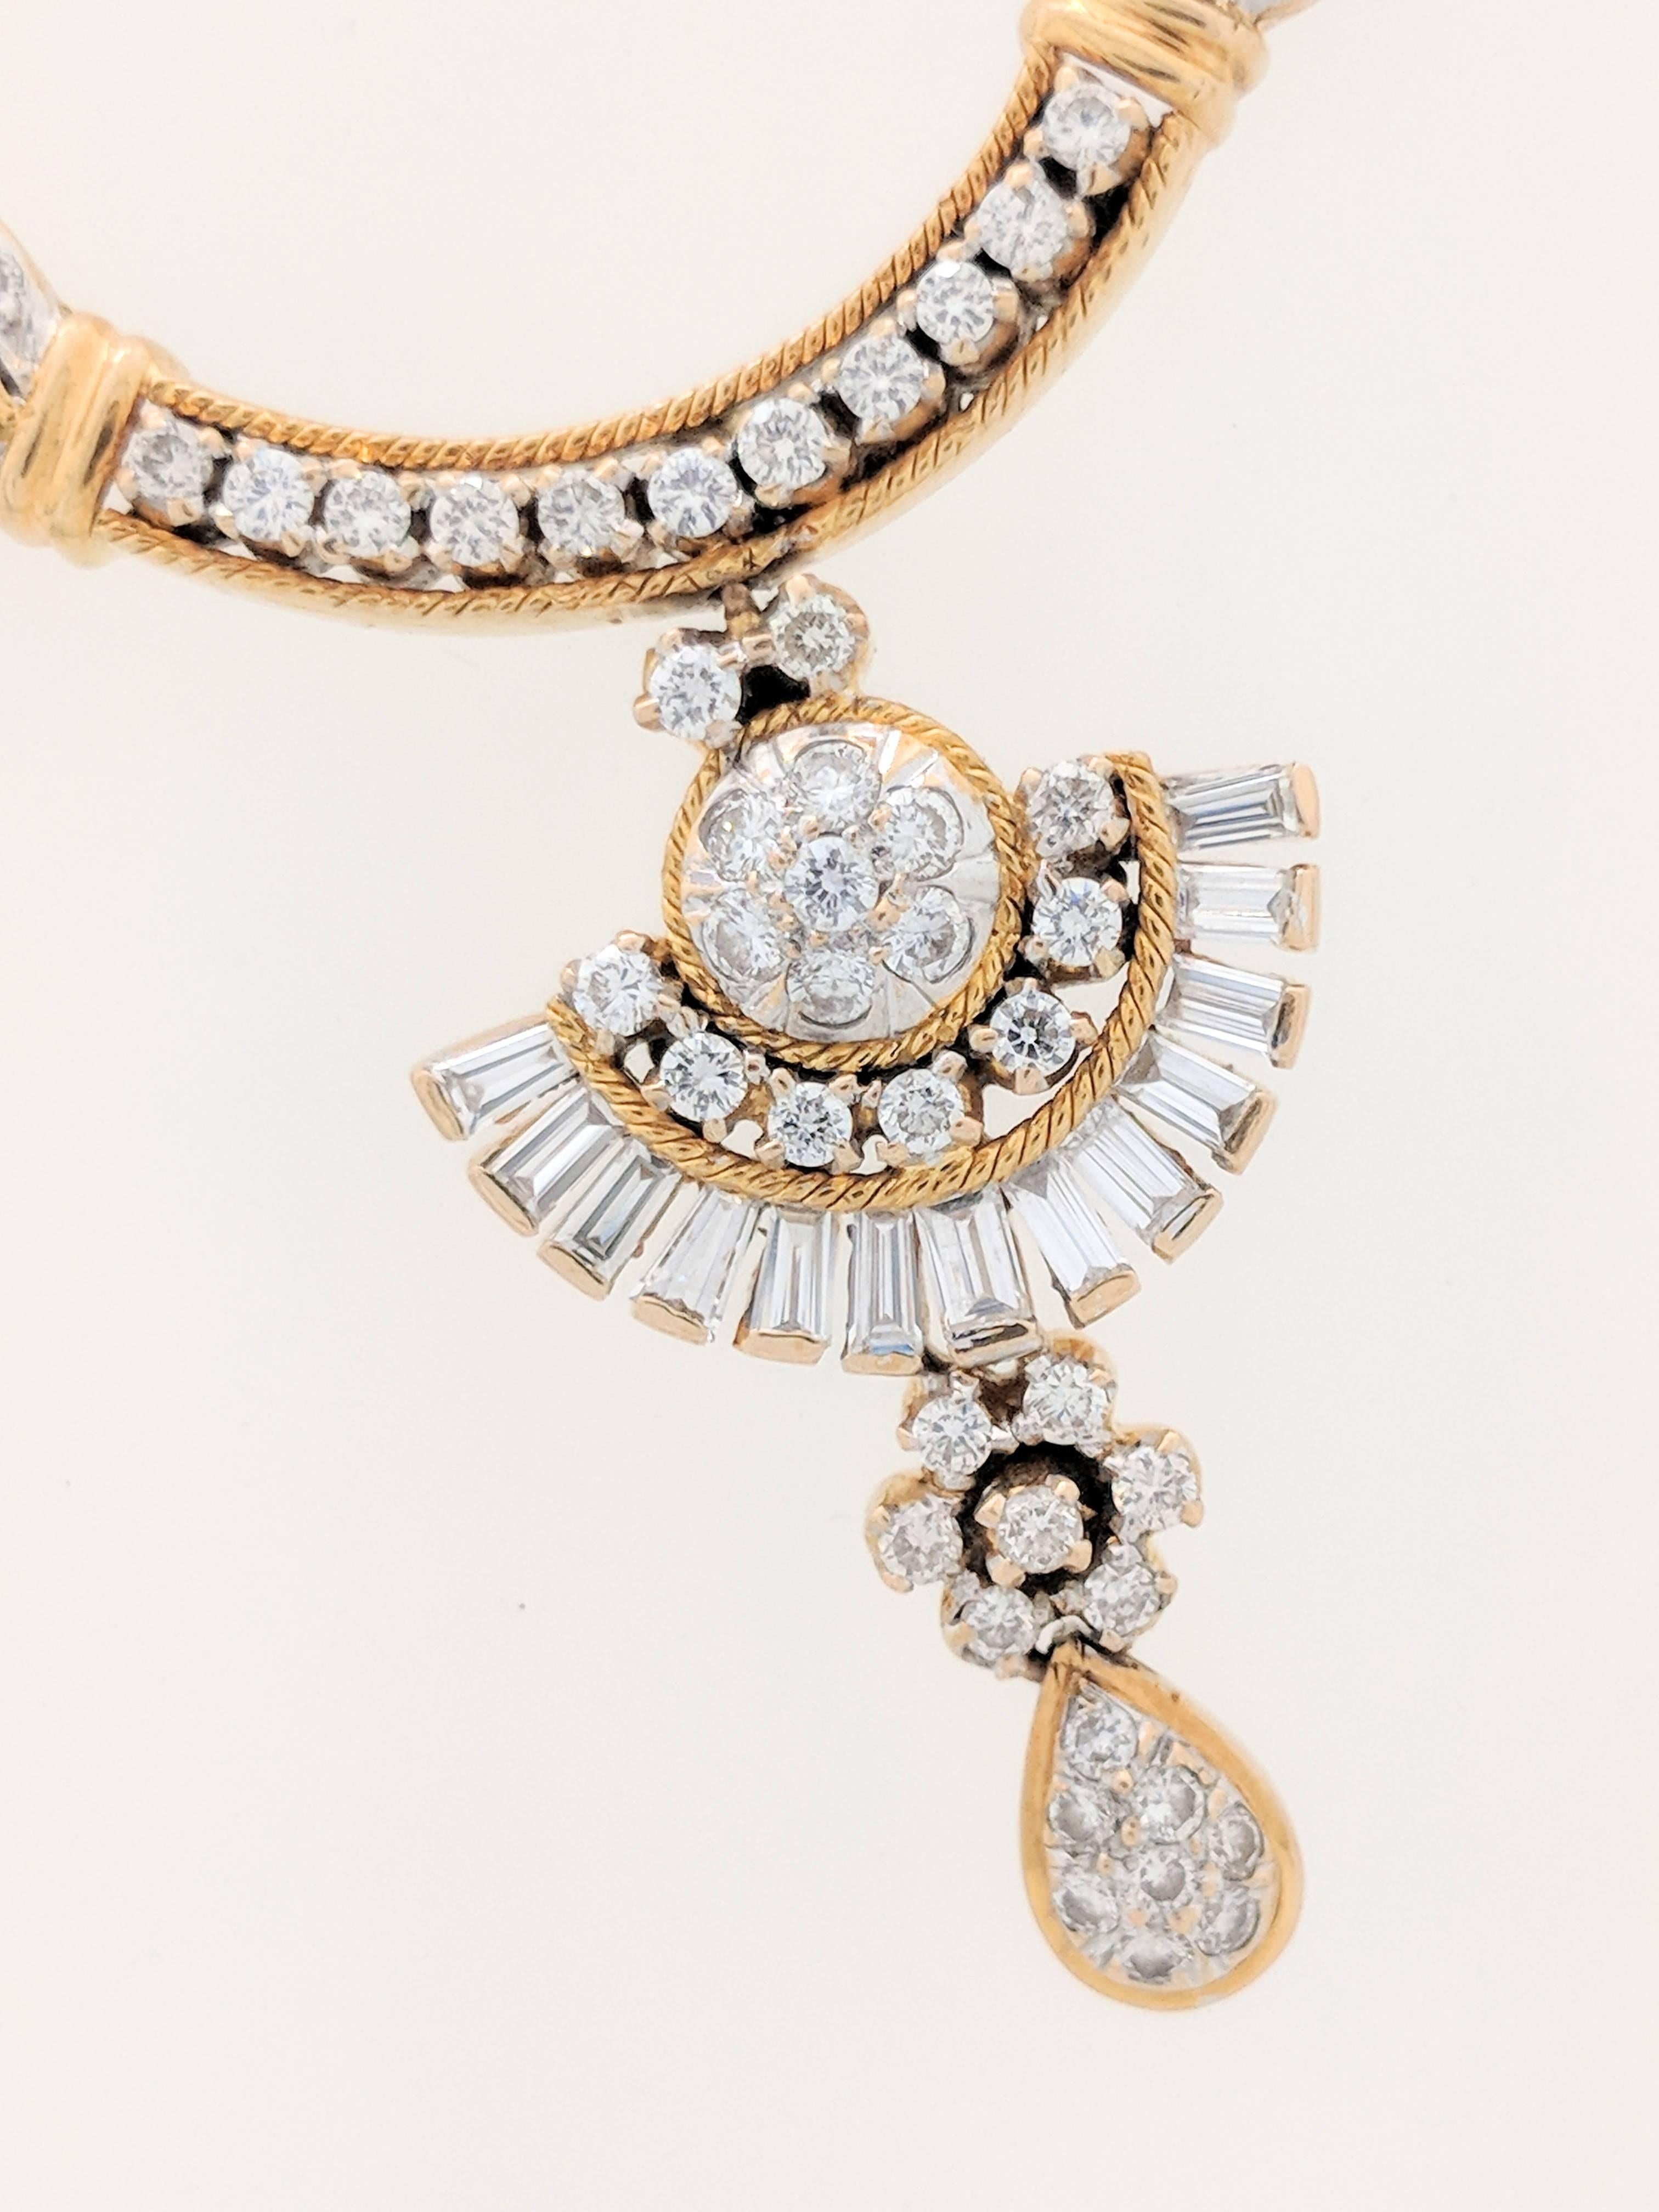 Round Cut 22 Karat Gold Handmade Mangalsutra Necklace Indian Bridal Jewelry with Diamonds